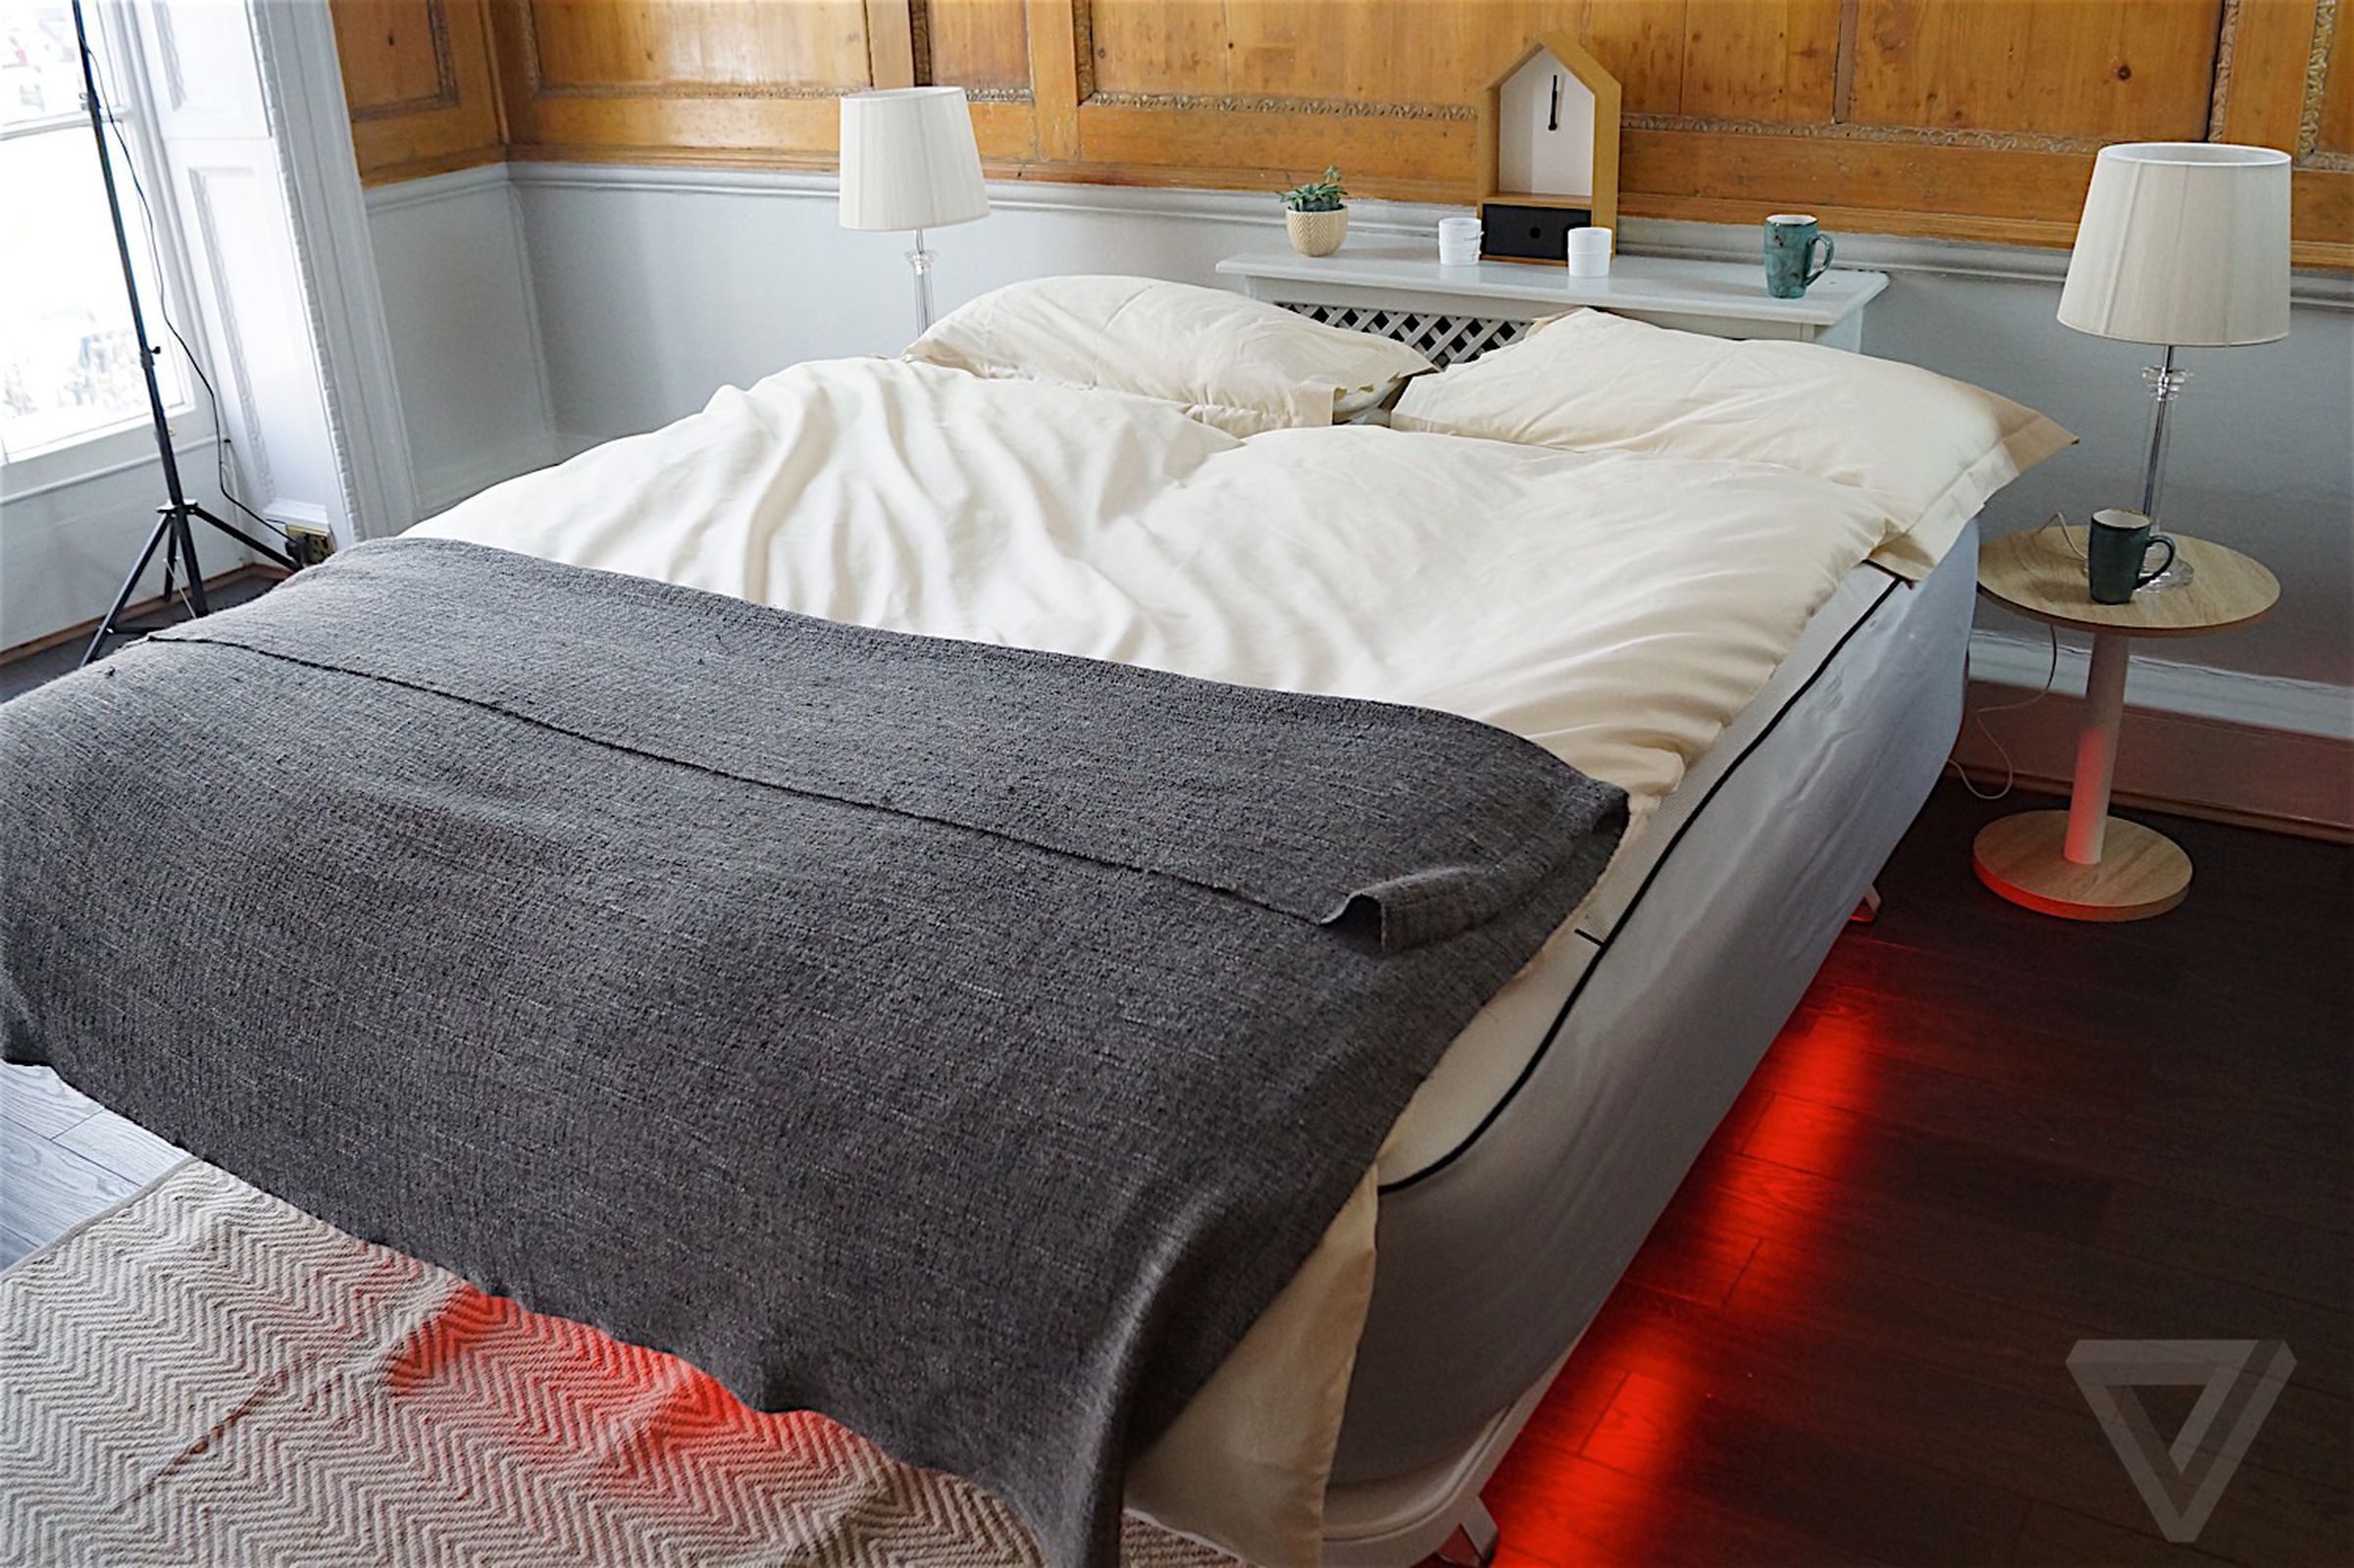 Balluga smart bed